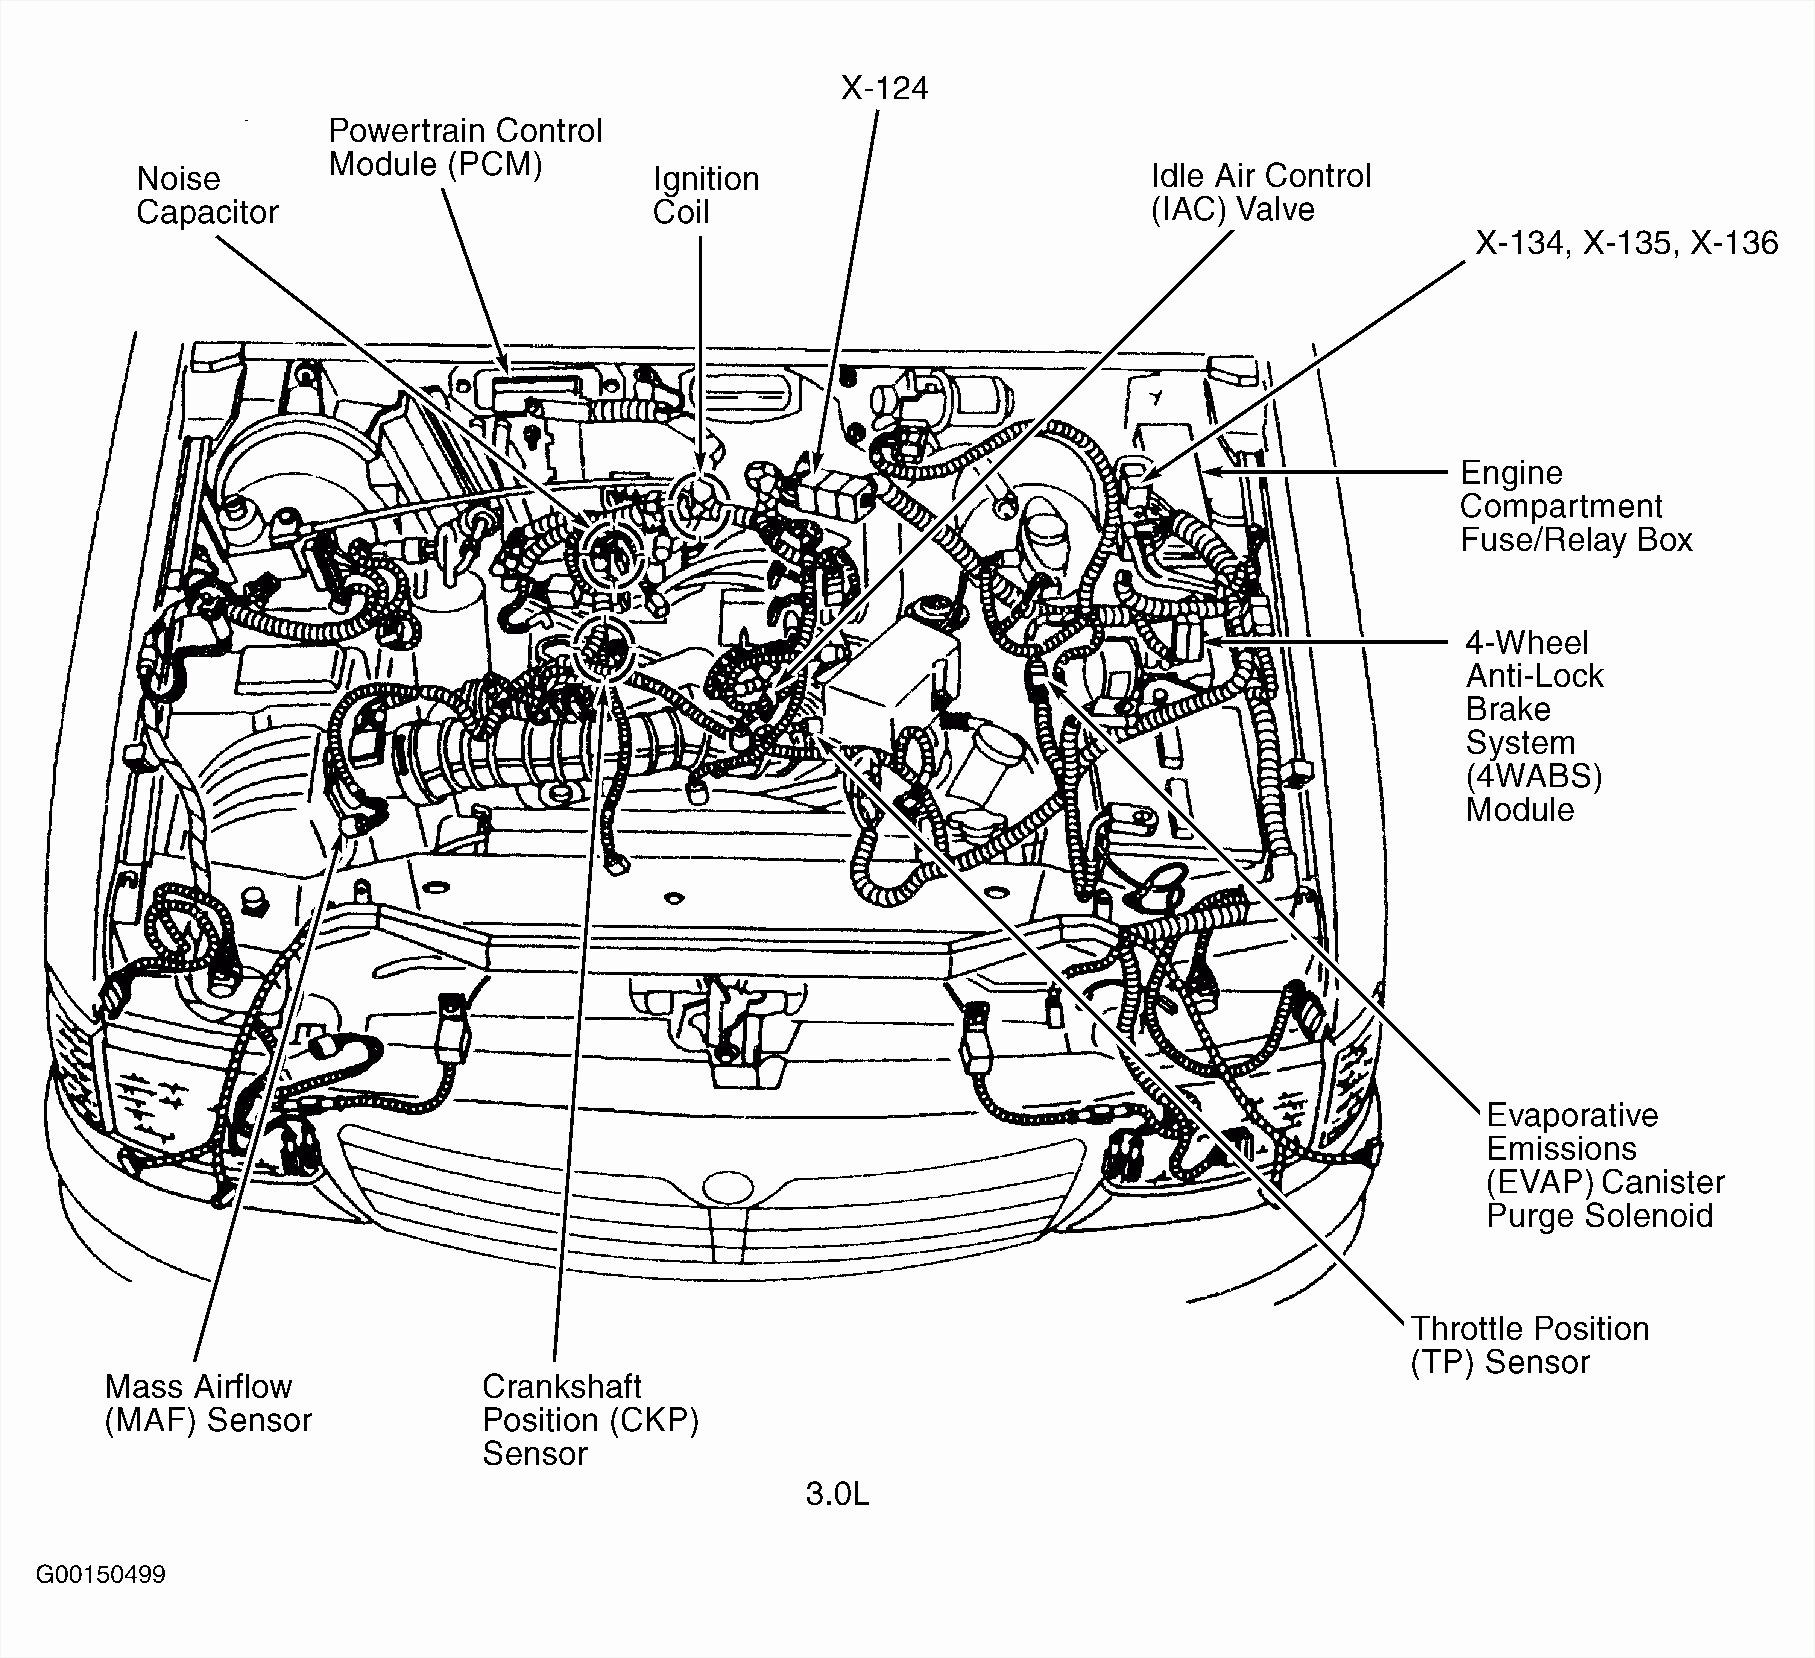 95 Jeep Wrangler Engine Diagram 1997 Jeep Cherokee Engine Diagram Wiring Diagram Paper Of 95 Jeep Wrangler Engine Diagram